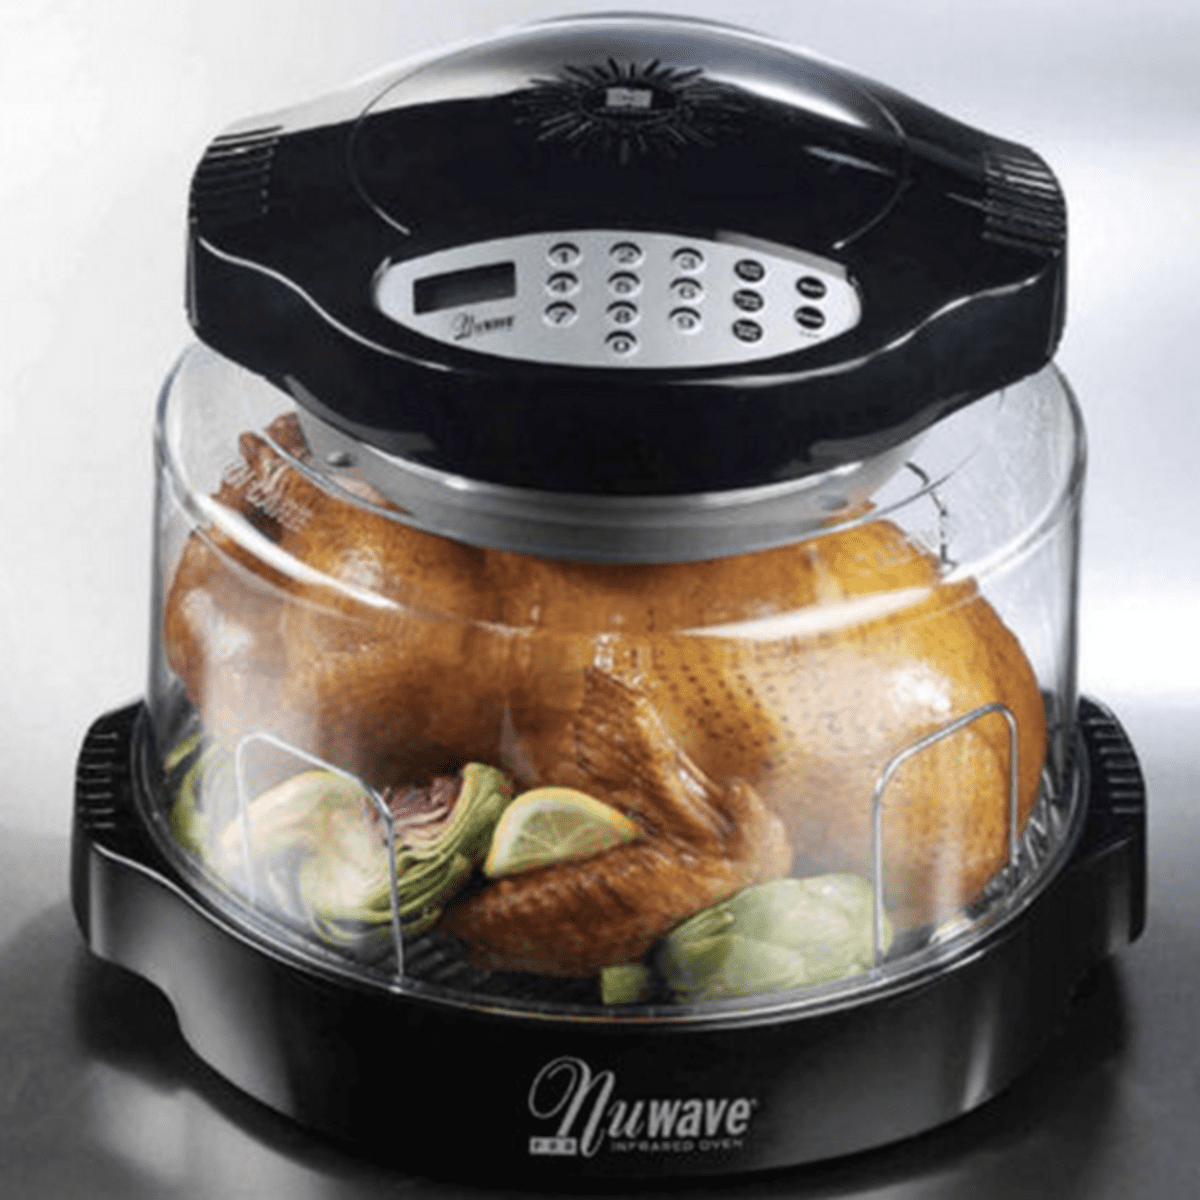 Instant Pot vs. Nu-wave pressure cooker: Product Review 